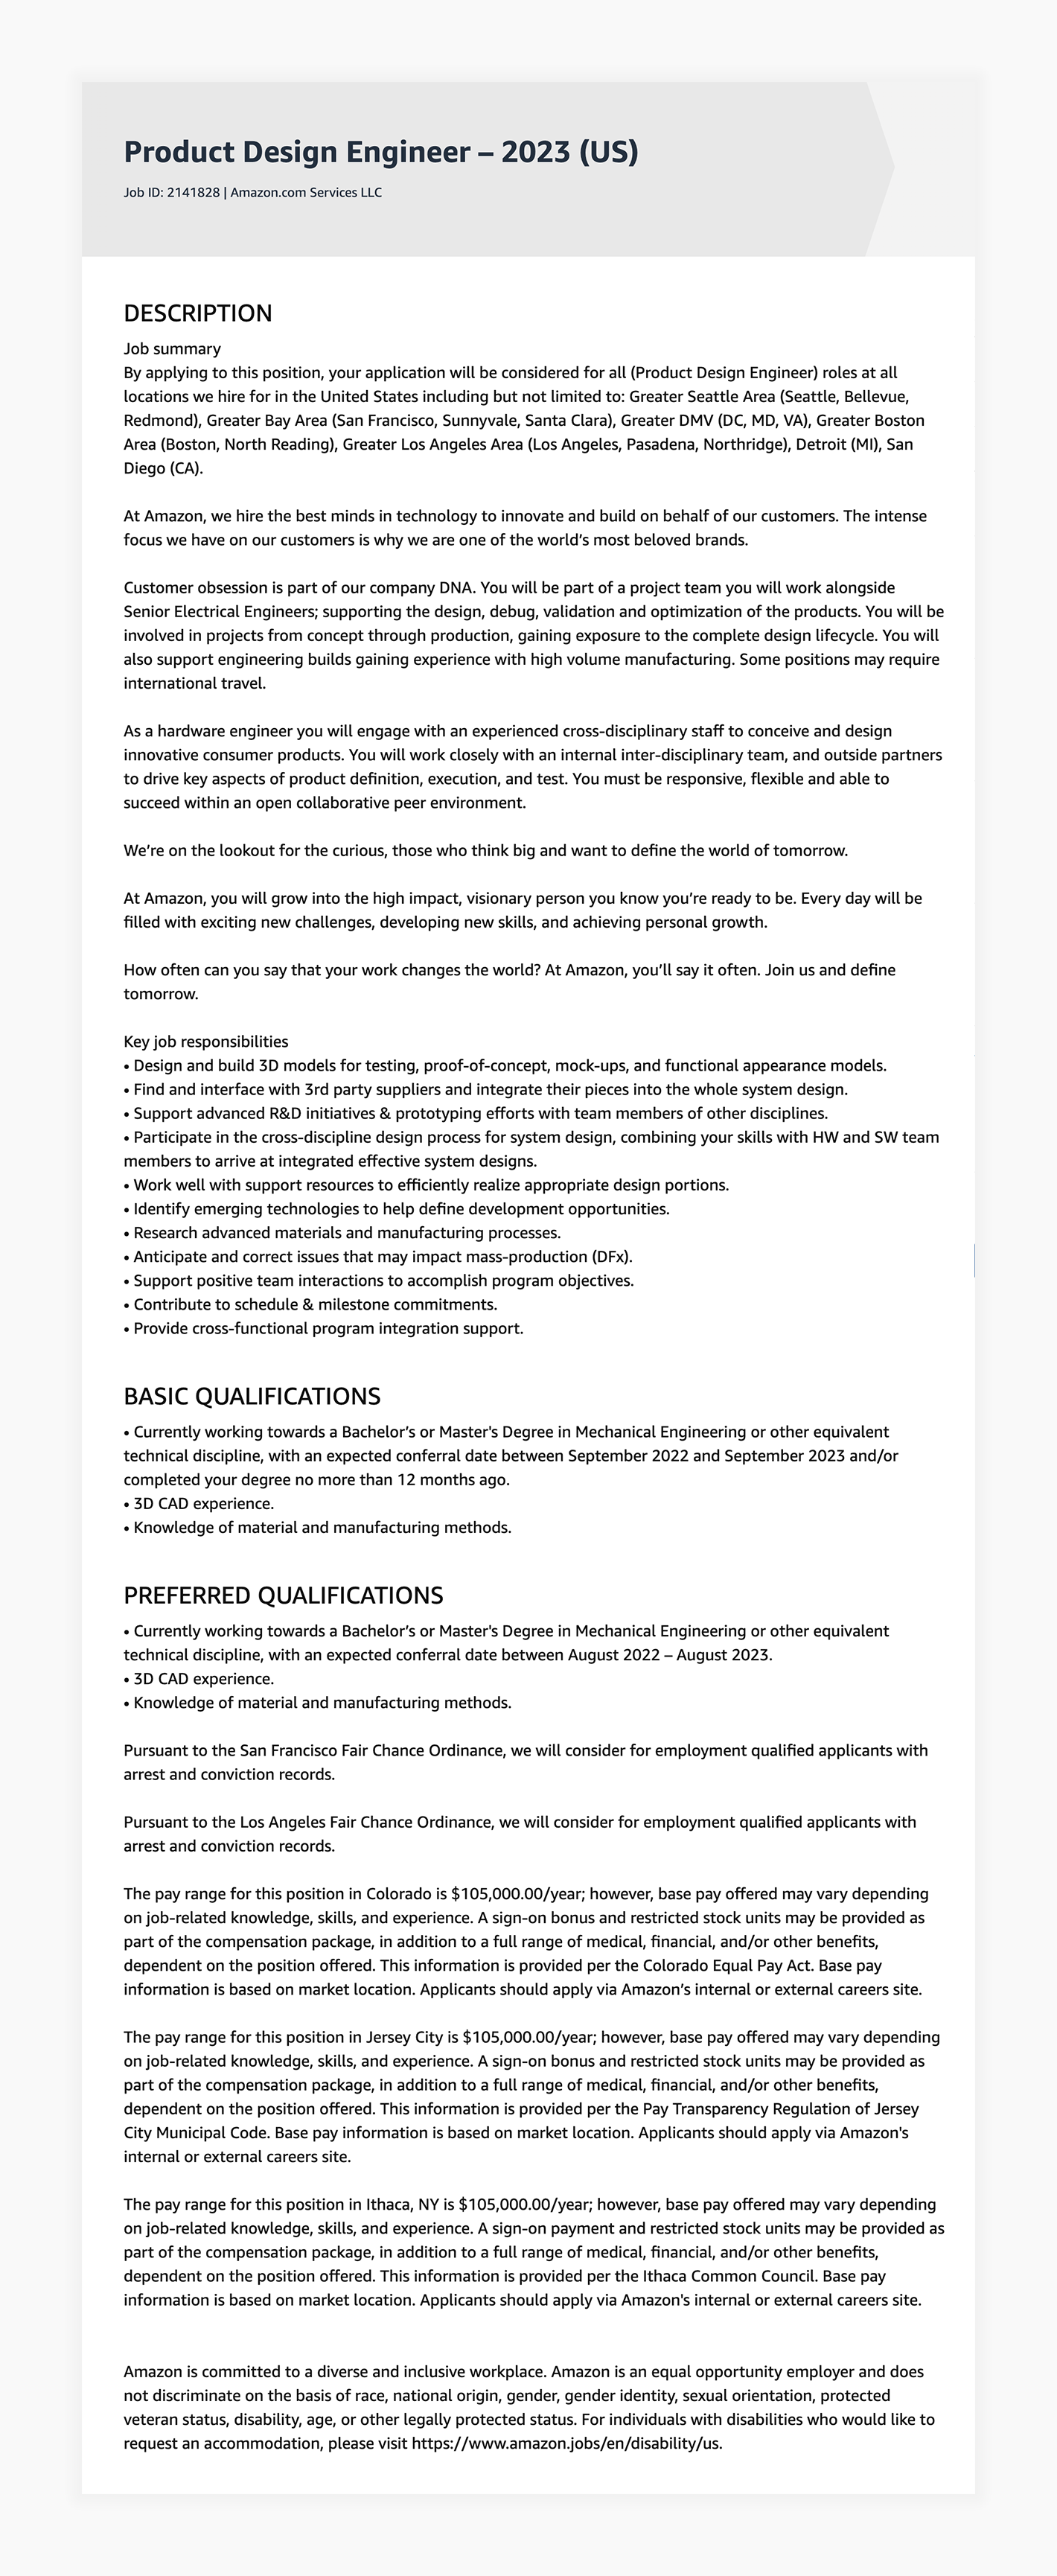 Screenshot of Amazon's product design engineer job post